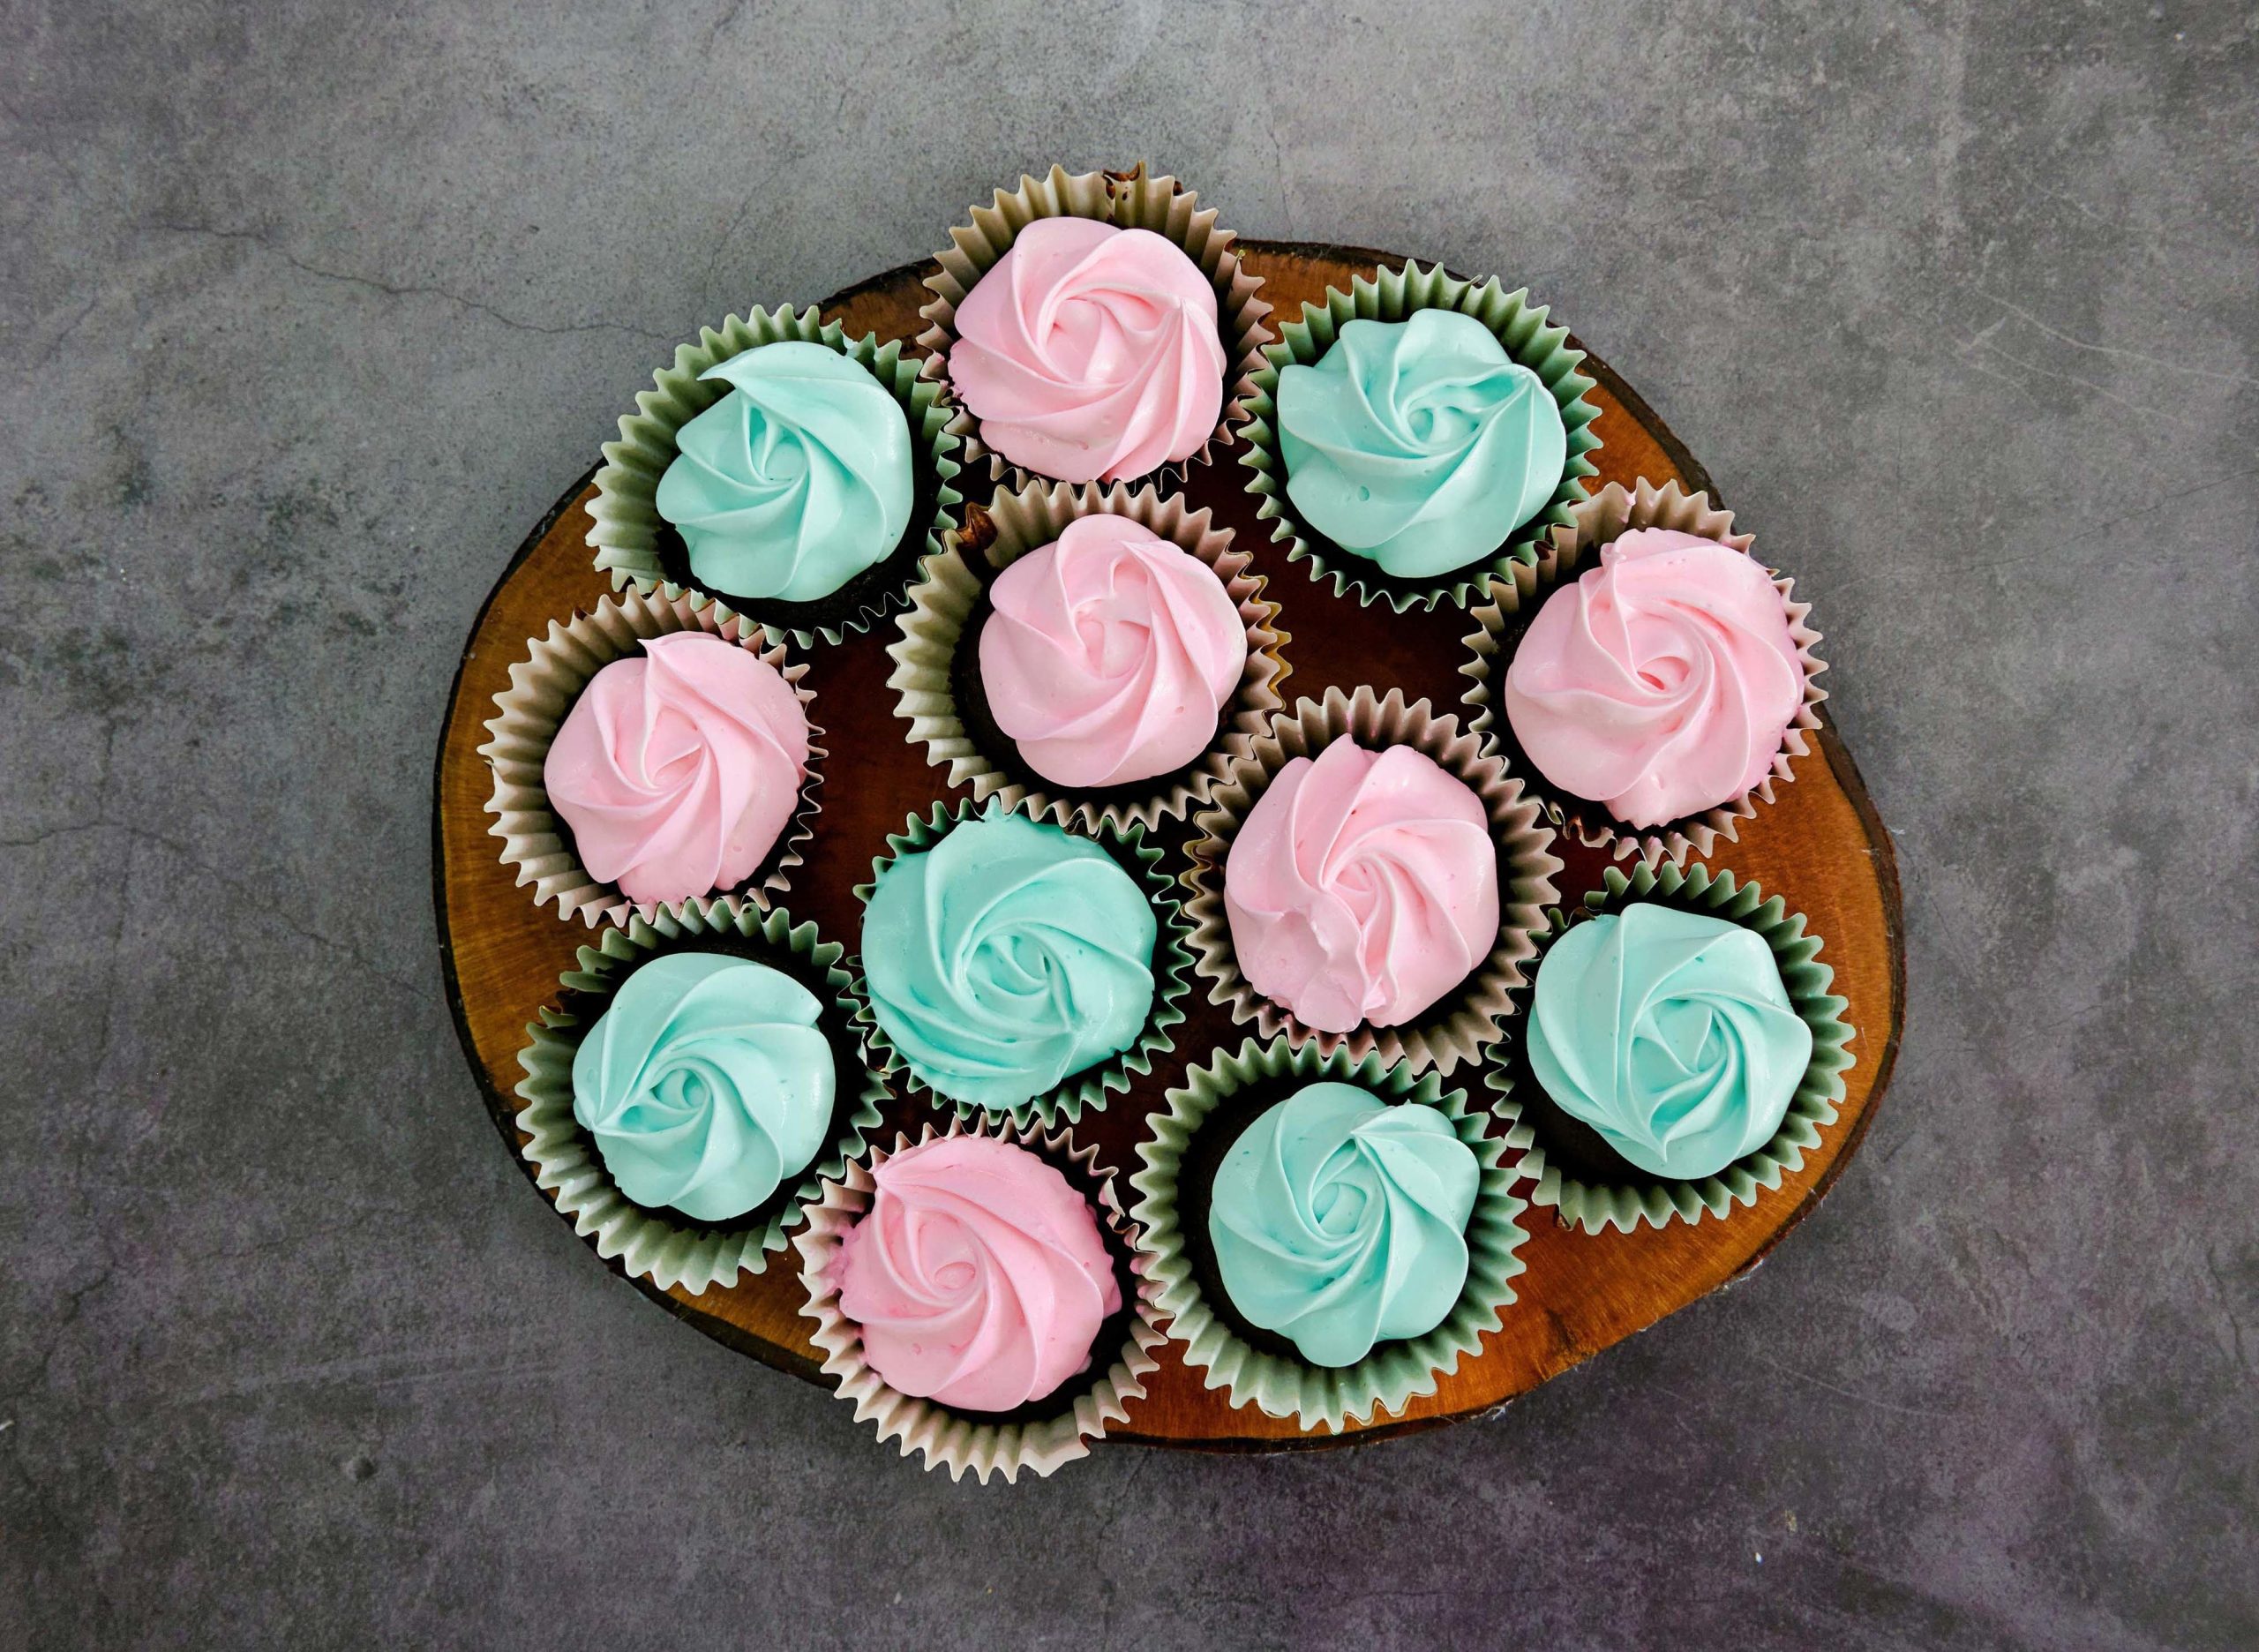 Pastel Color Cupcakes